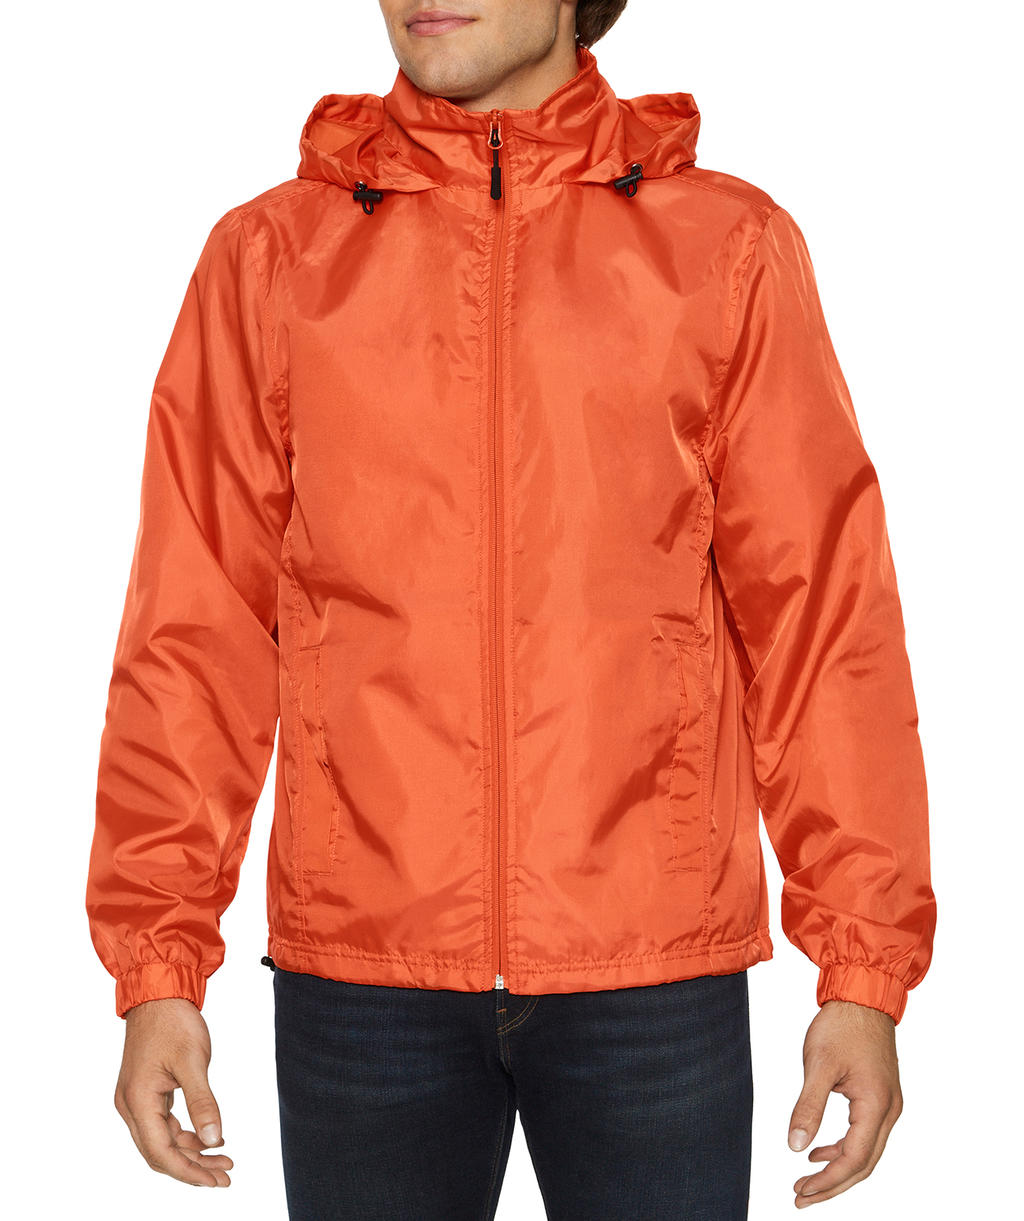  Hammer? Unisex Windwear Jacket in Farbe Orange